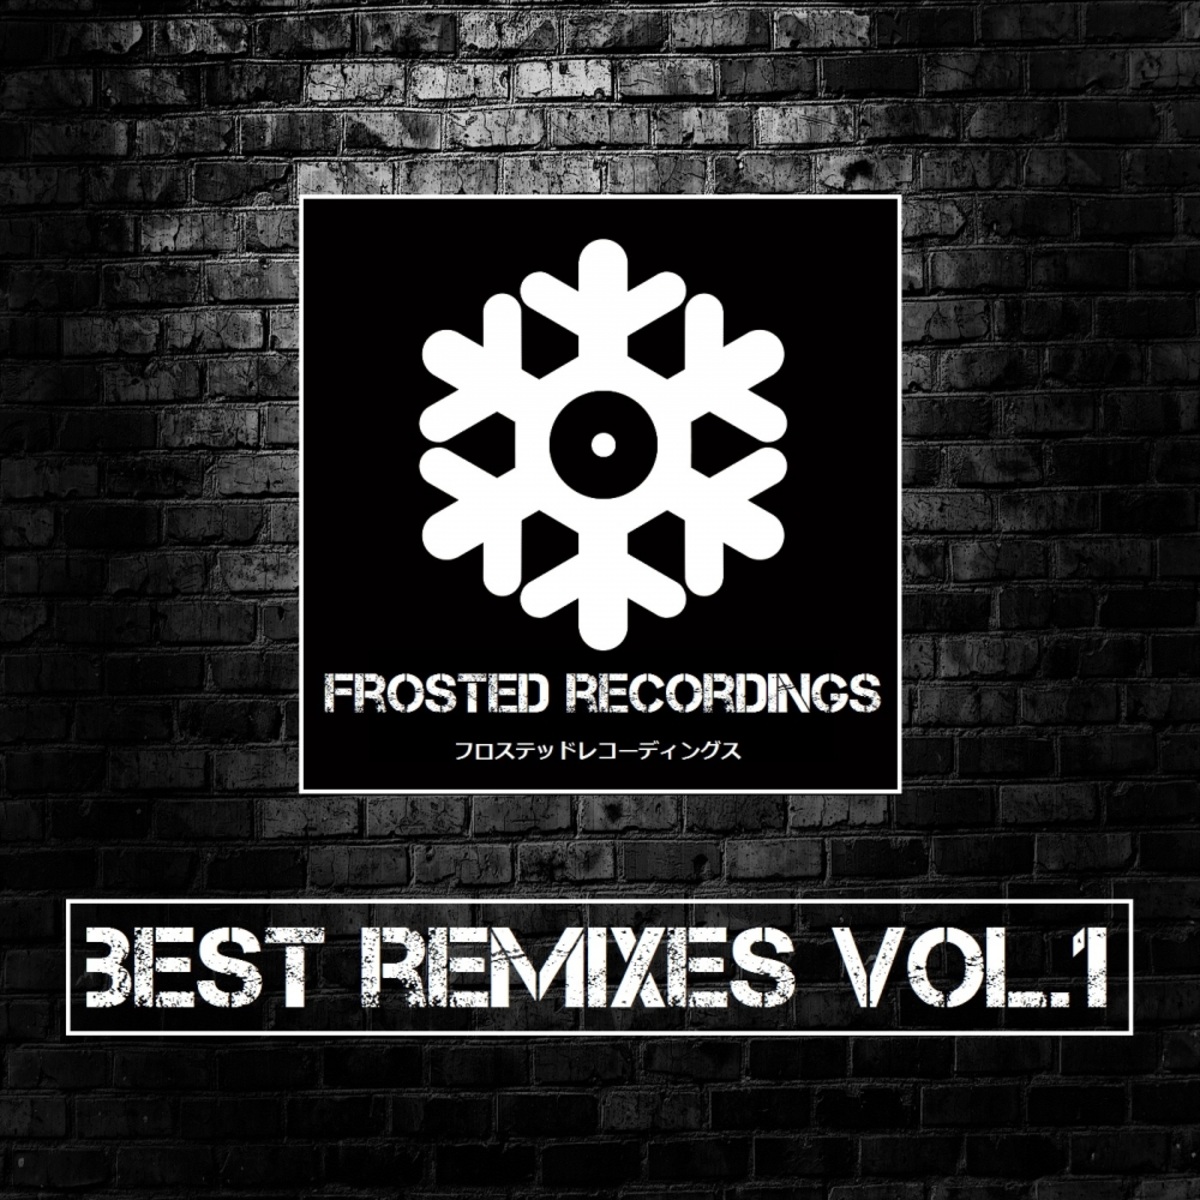 VA - Best Remixes, Vol. 1 / Frosted Recordings